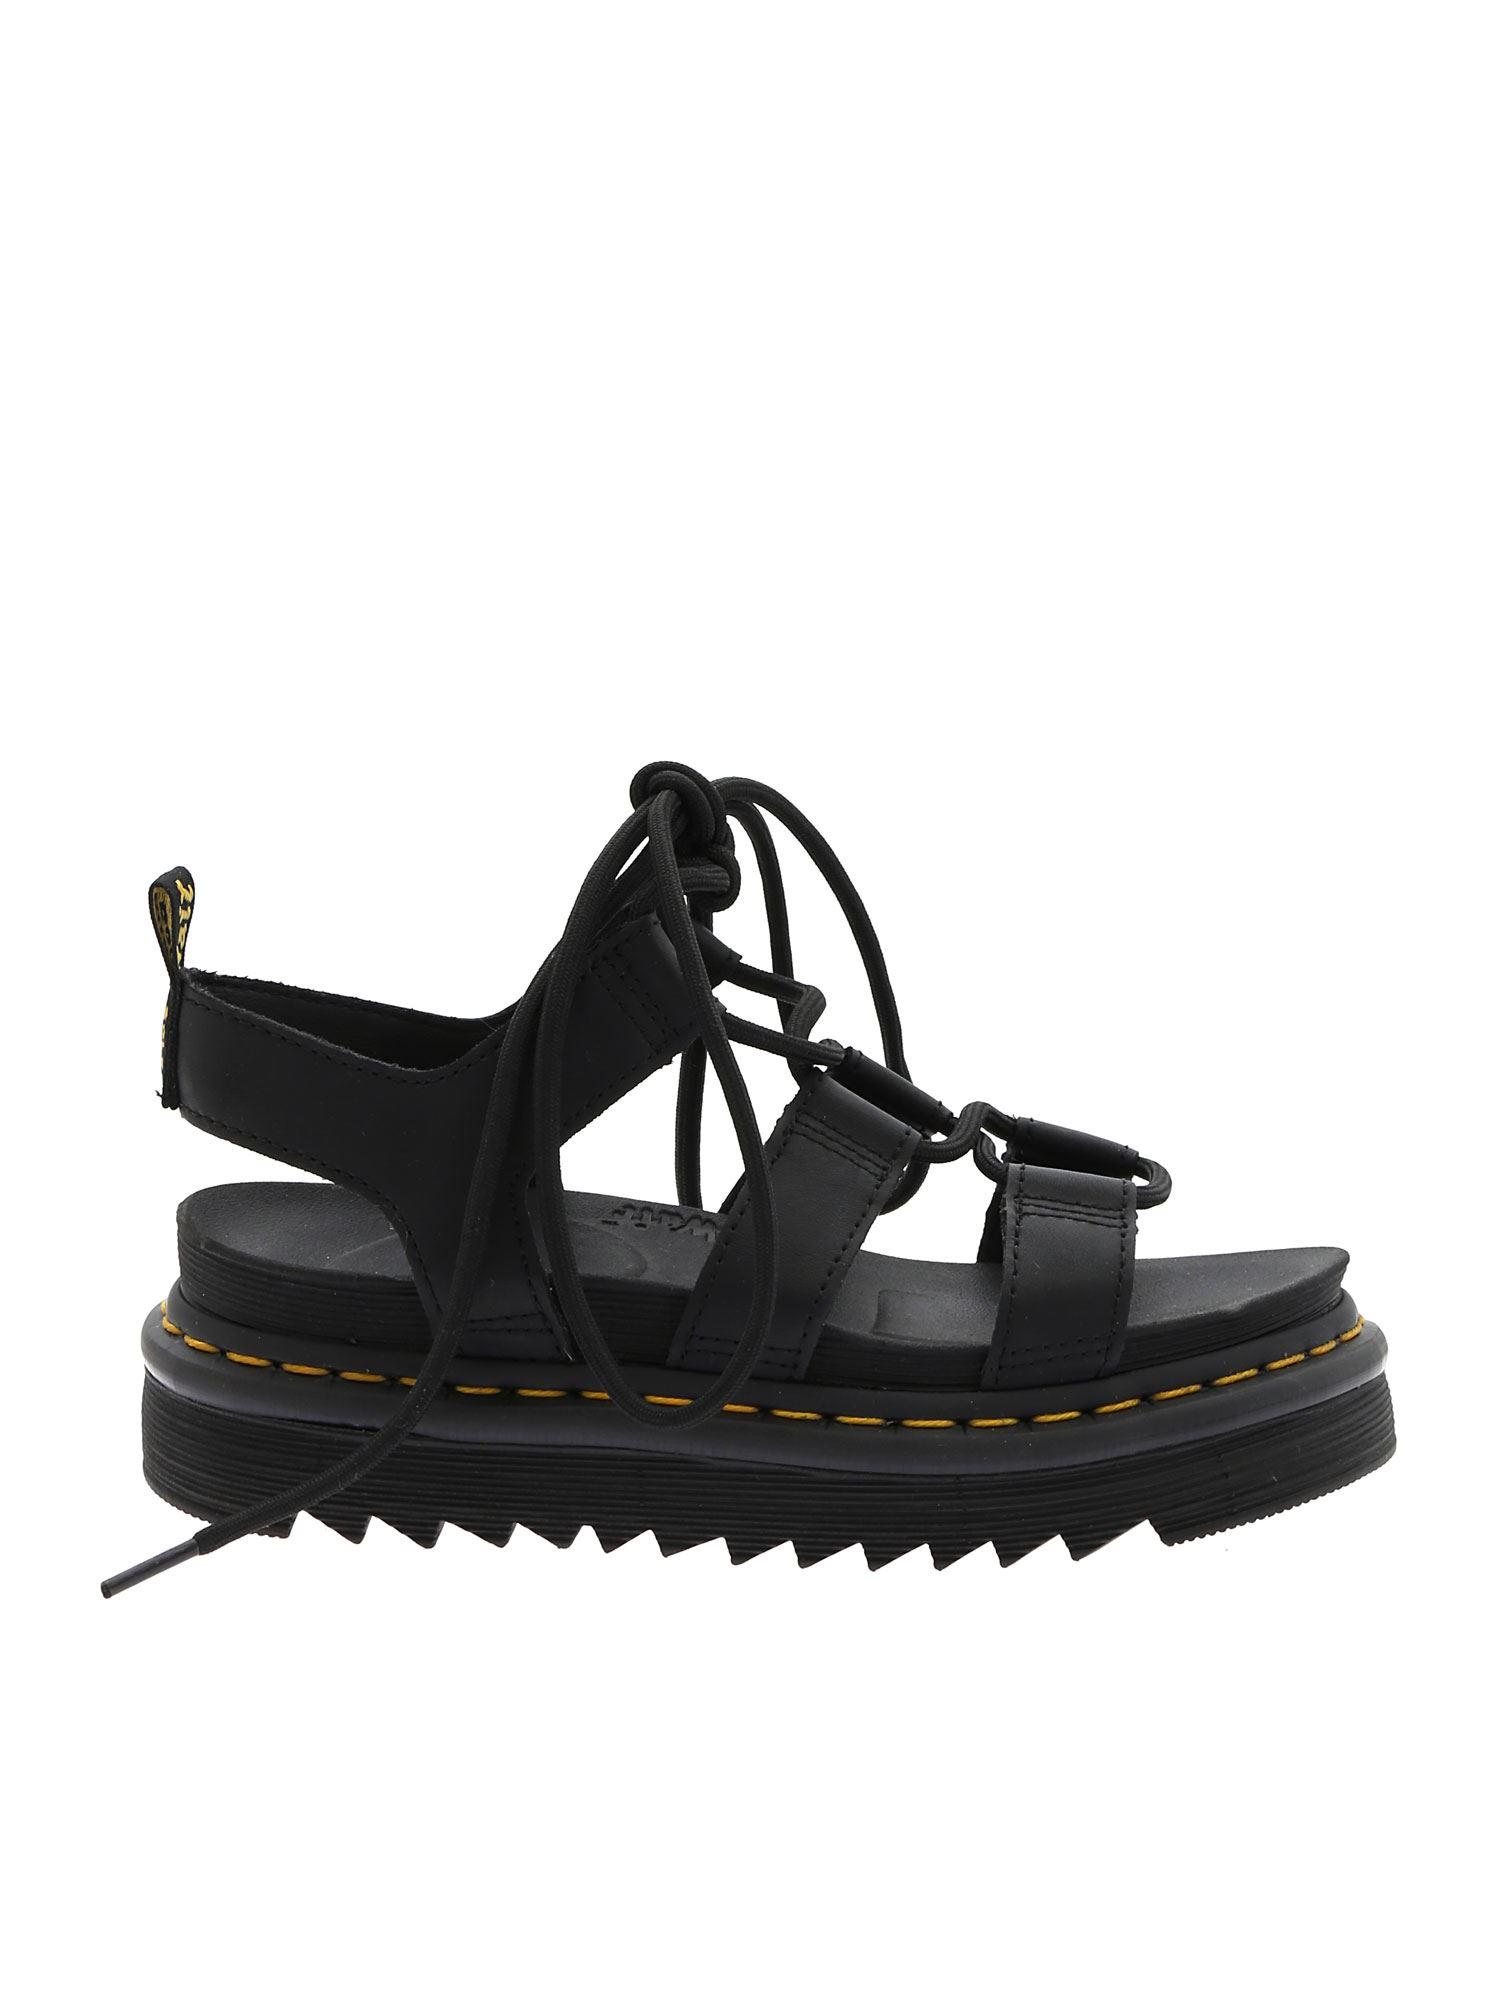 Dr. Martens Black Leather Nartilla Hydro Sandals - Lyst